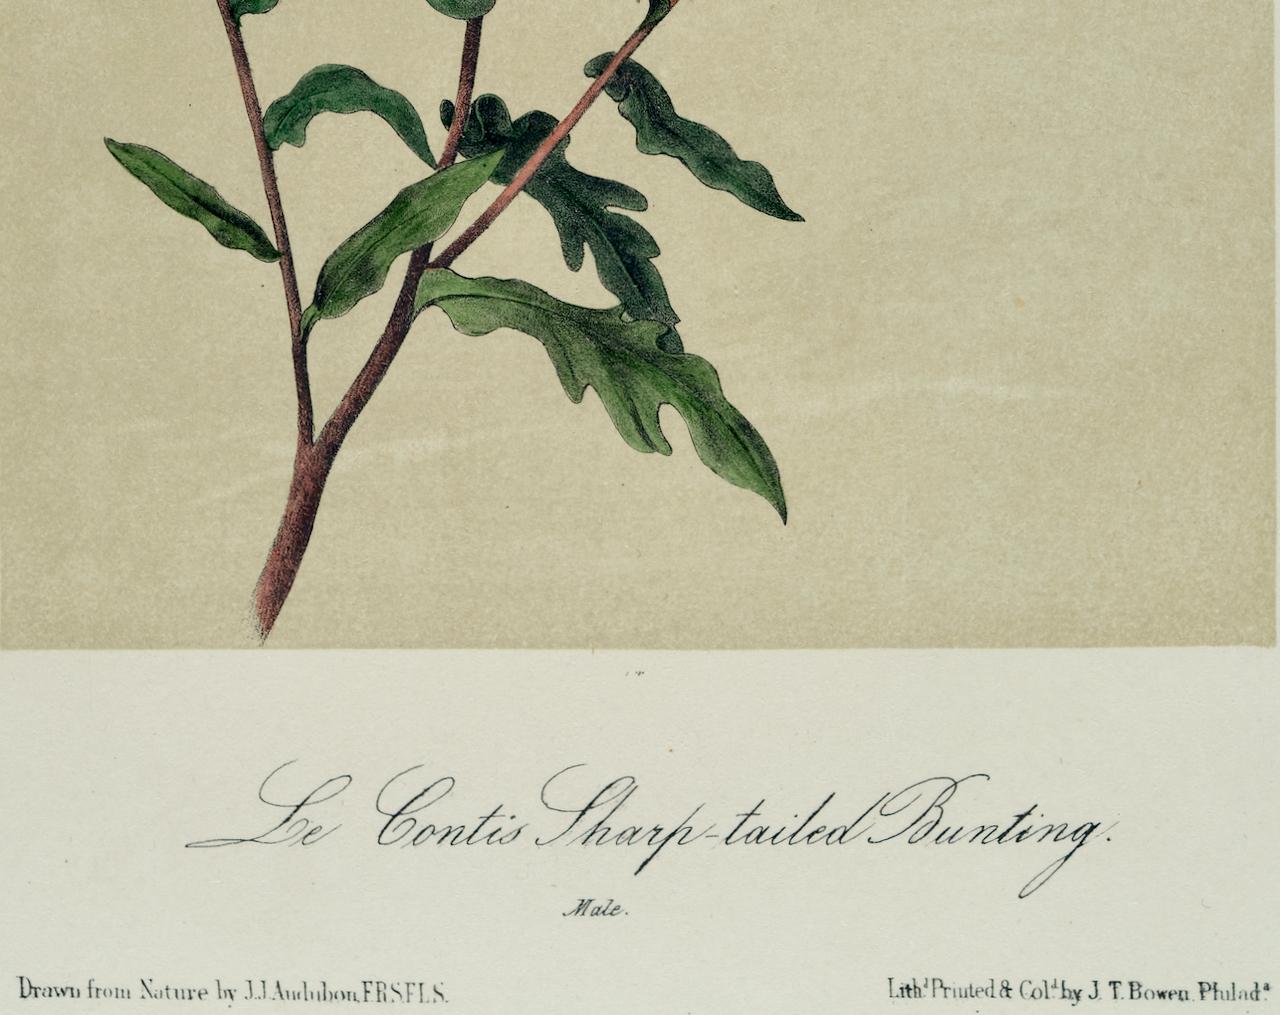 Le Contis Sharp-tailed Bunting: Original Audubon Hand-colored Bird Lithograph  - Naturalistic Print by John James Audubon